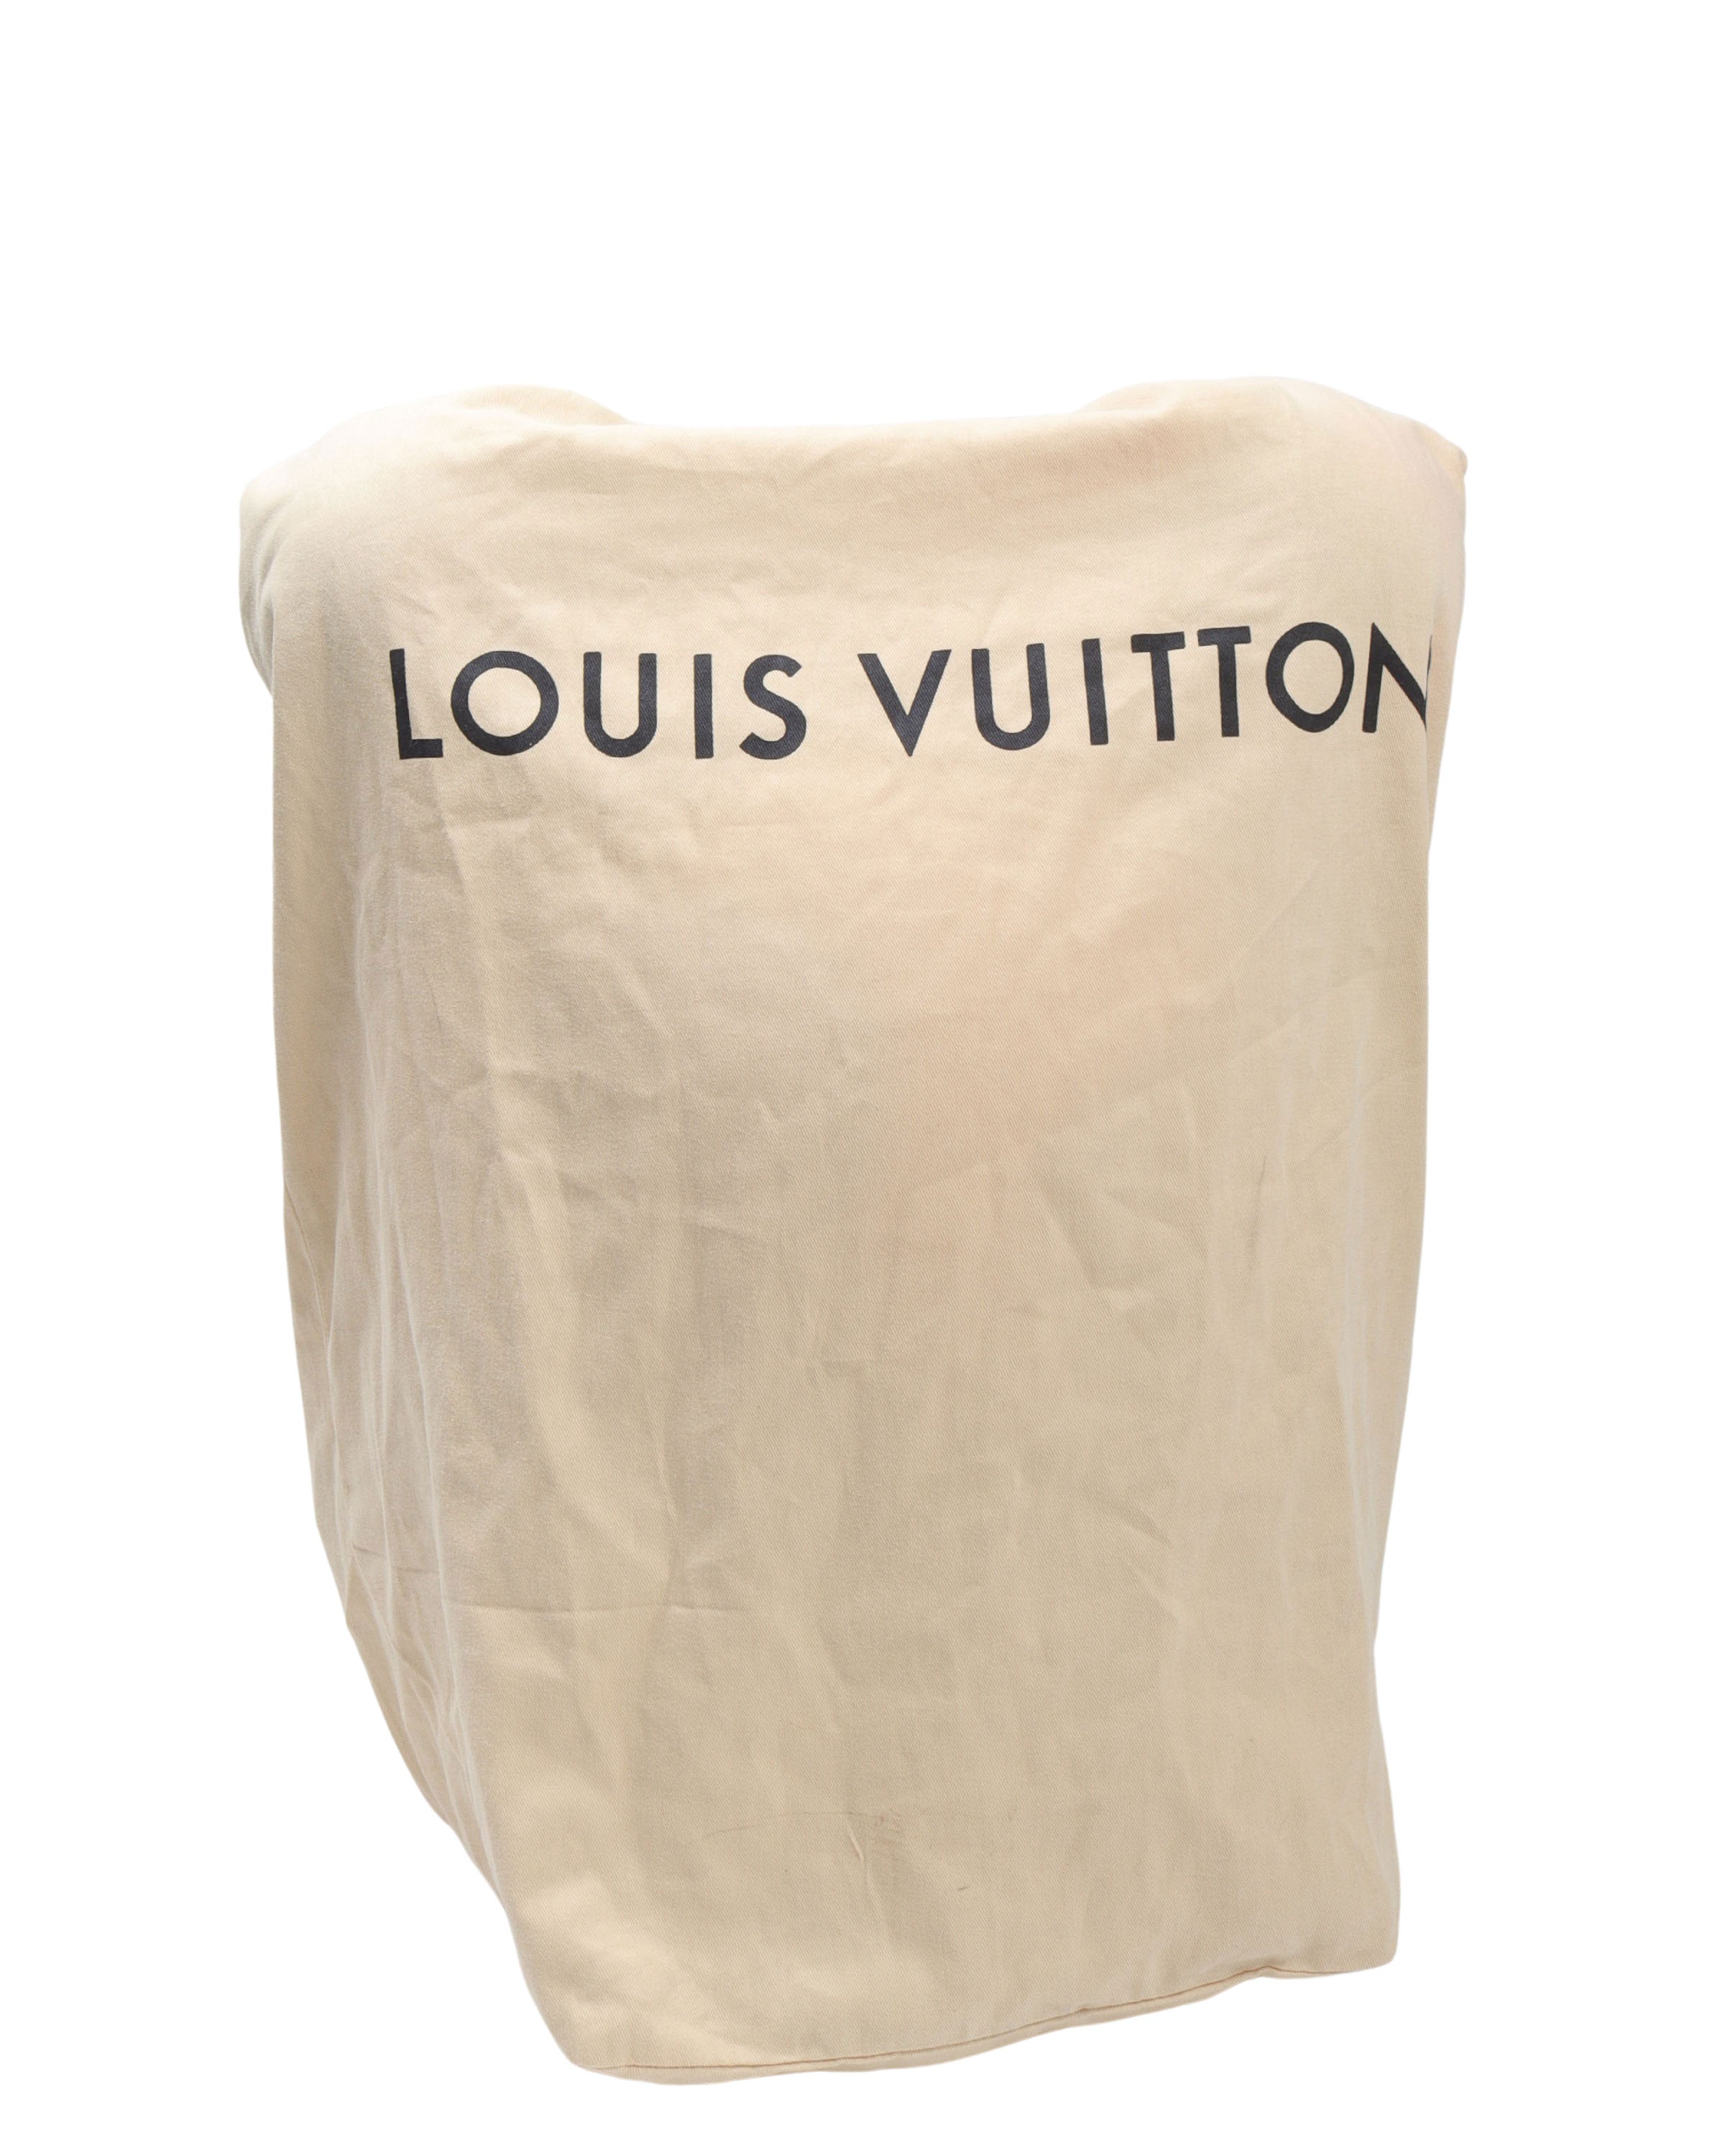 Louis Vuitton x Takashi Murakami Plush Toys